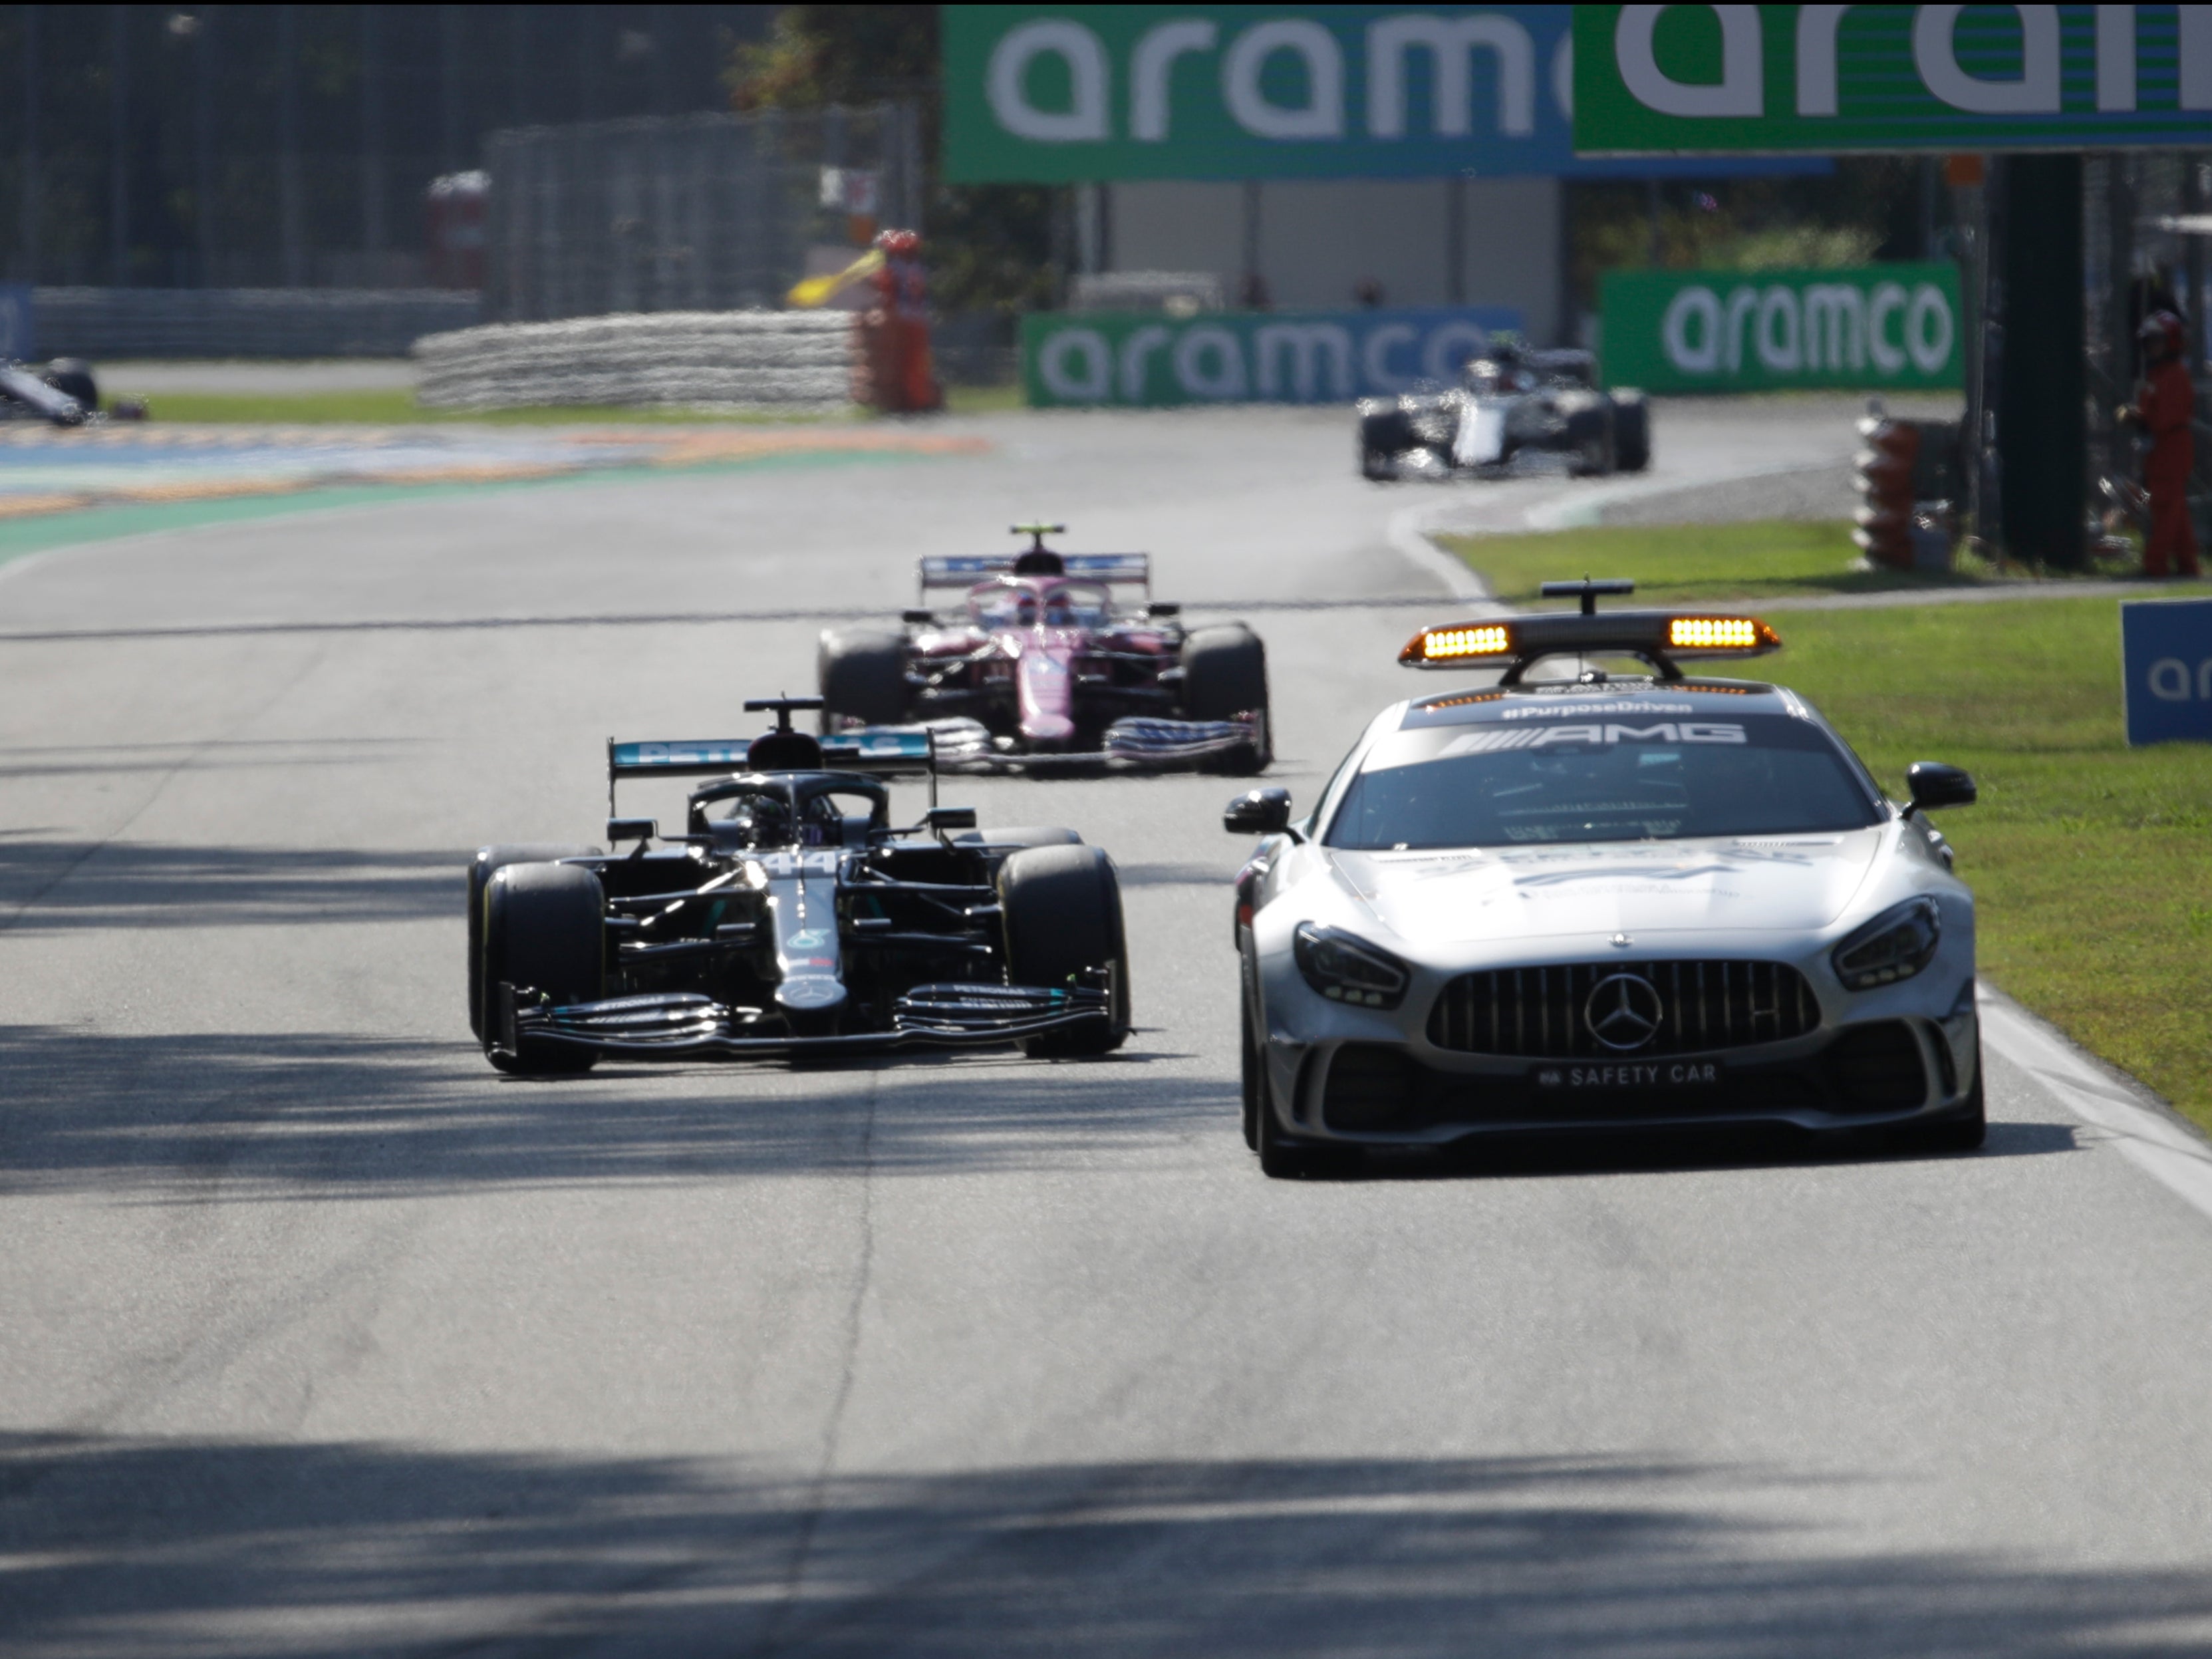 Lewis Hamilton follows the safety car during the Italian Grand Prix